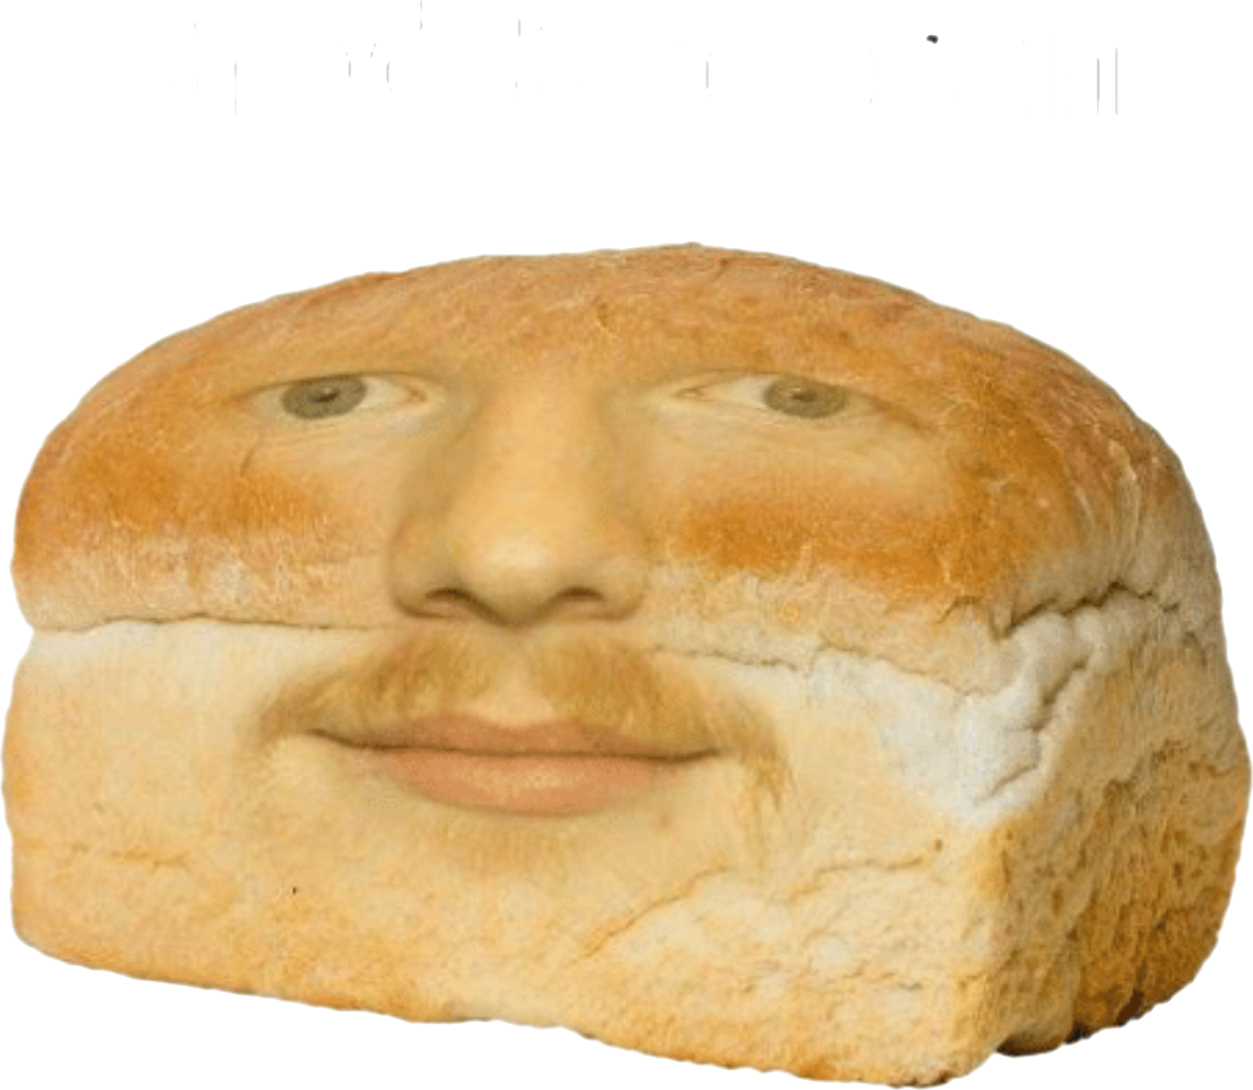 High Quality Bread Sheeran Blank Meme Template